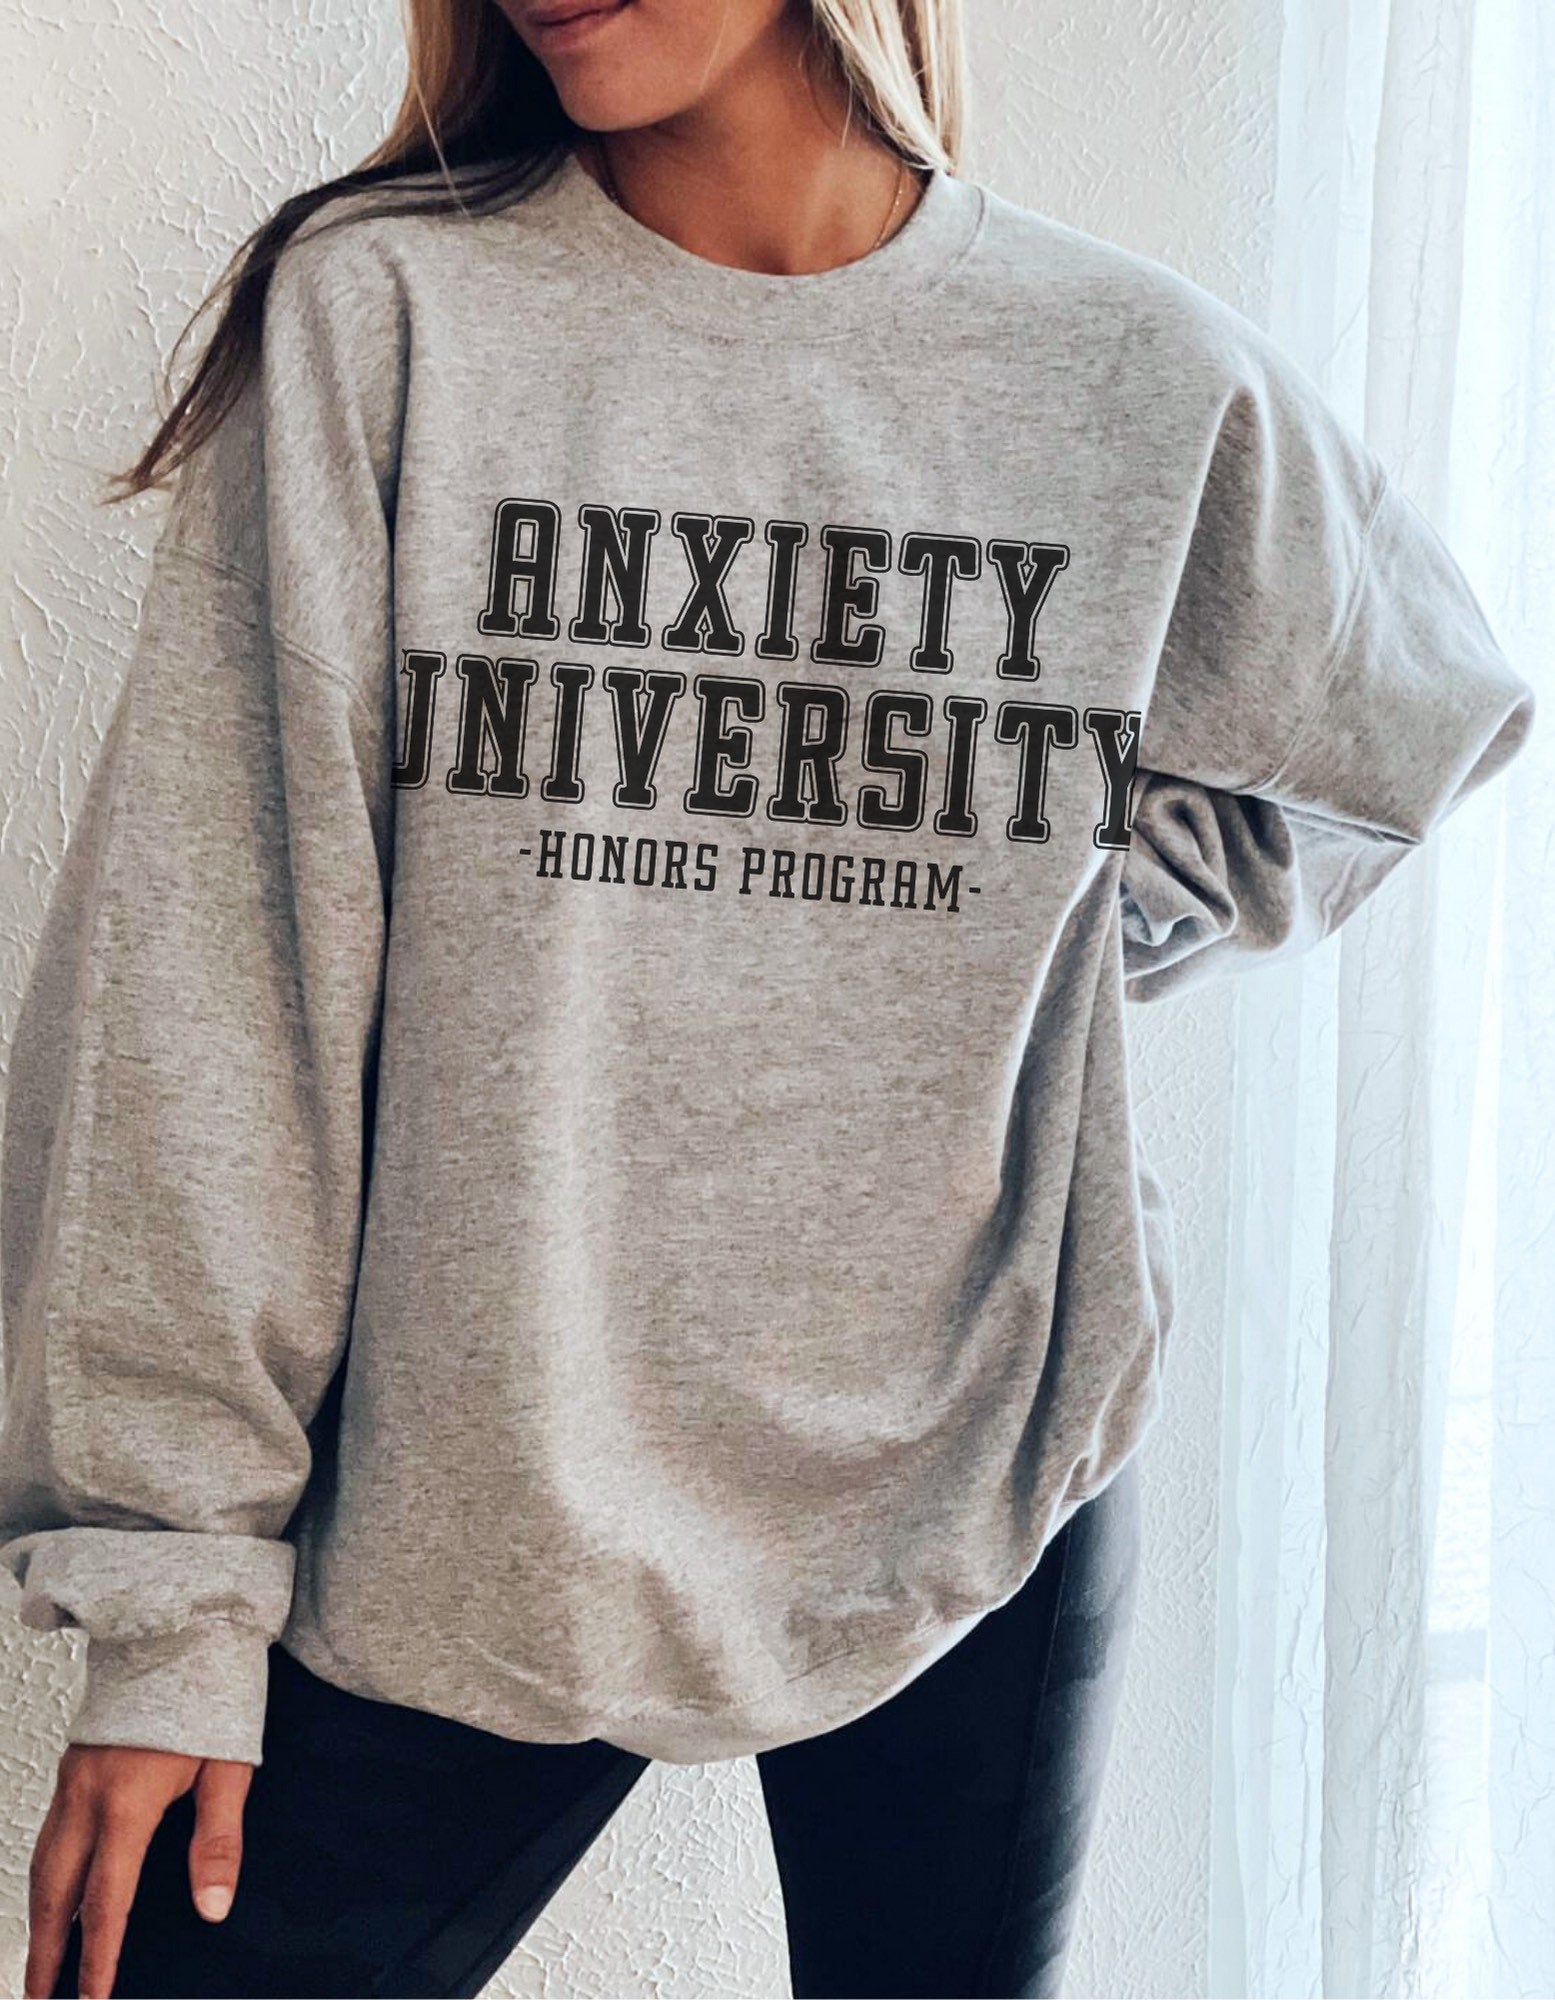 Anxiety University Honors Program Sweatshirt - lemonanddot